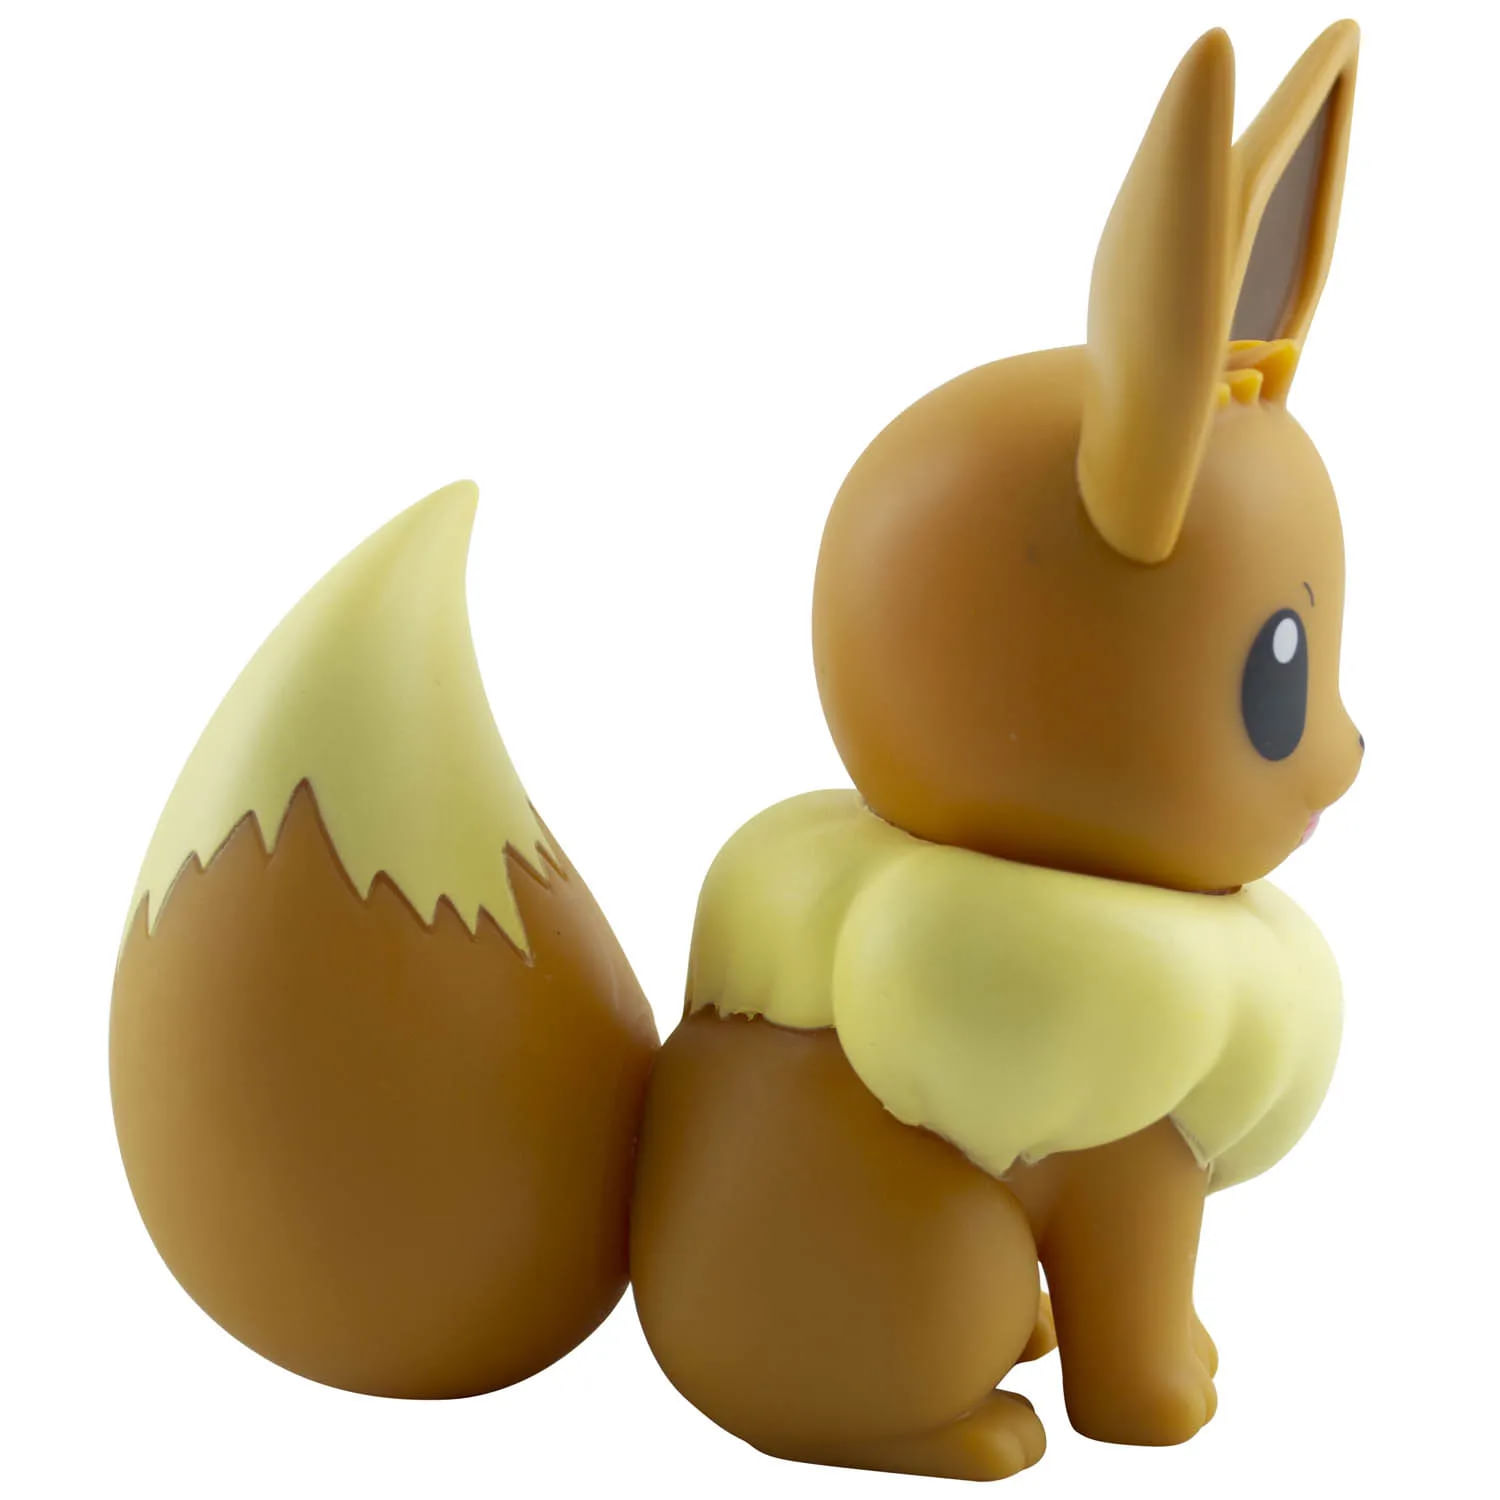 Figura de Vinil - Pokemon - Mew - Rosa - 10 cm - Sunny - Ri Happy